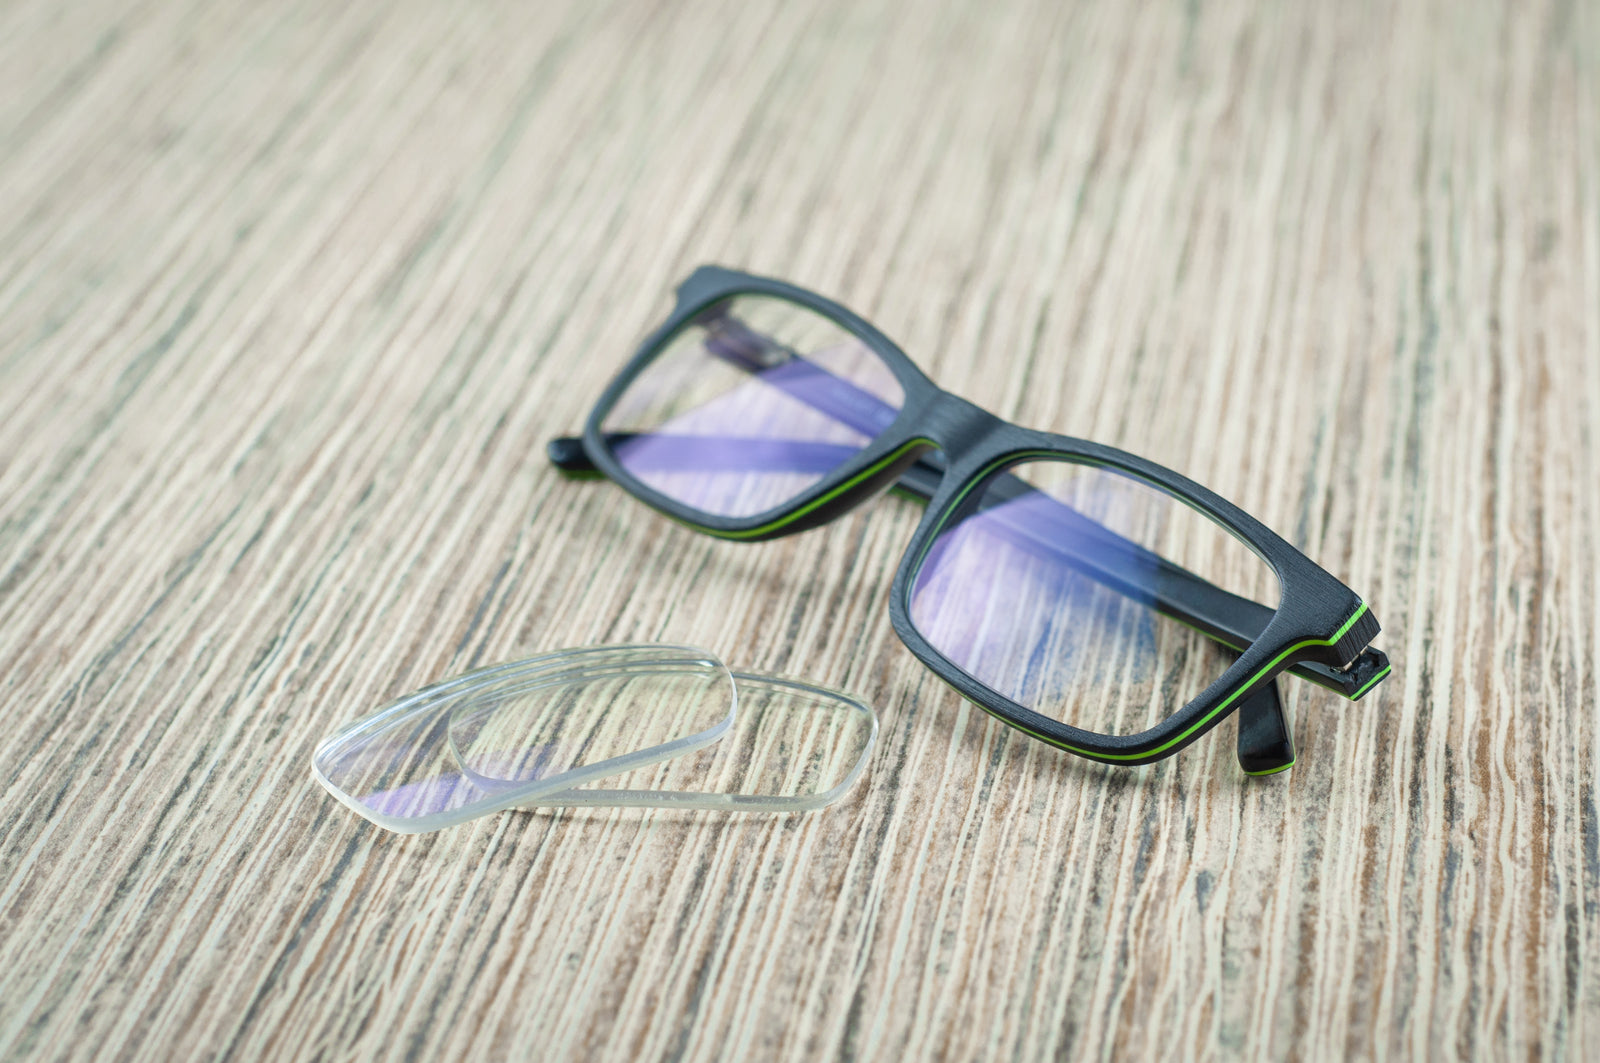 Glasses Lens Cleaner Eyeglass Scratch Removal Spray Lens